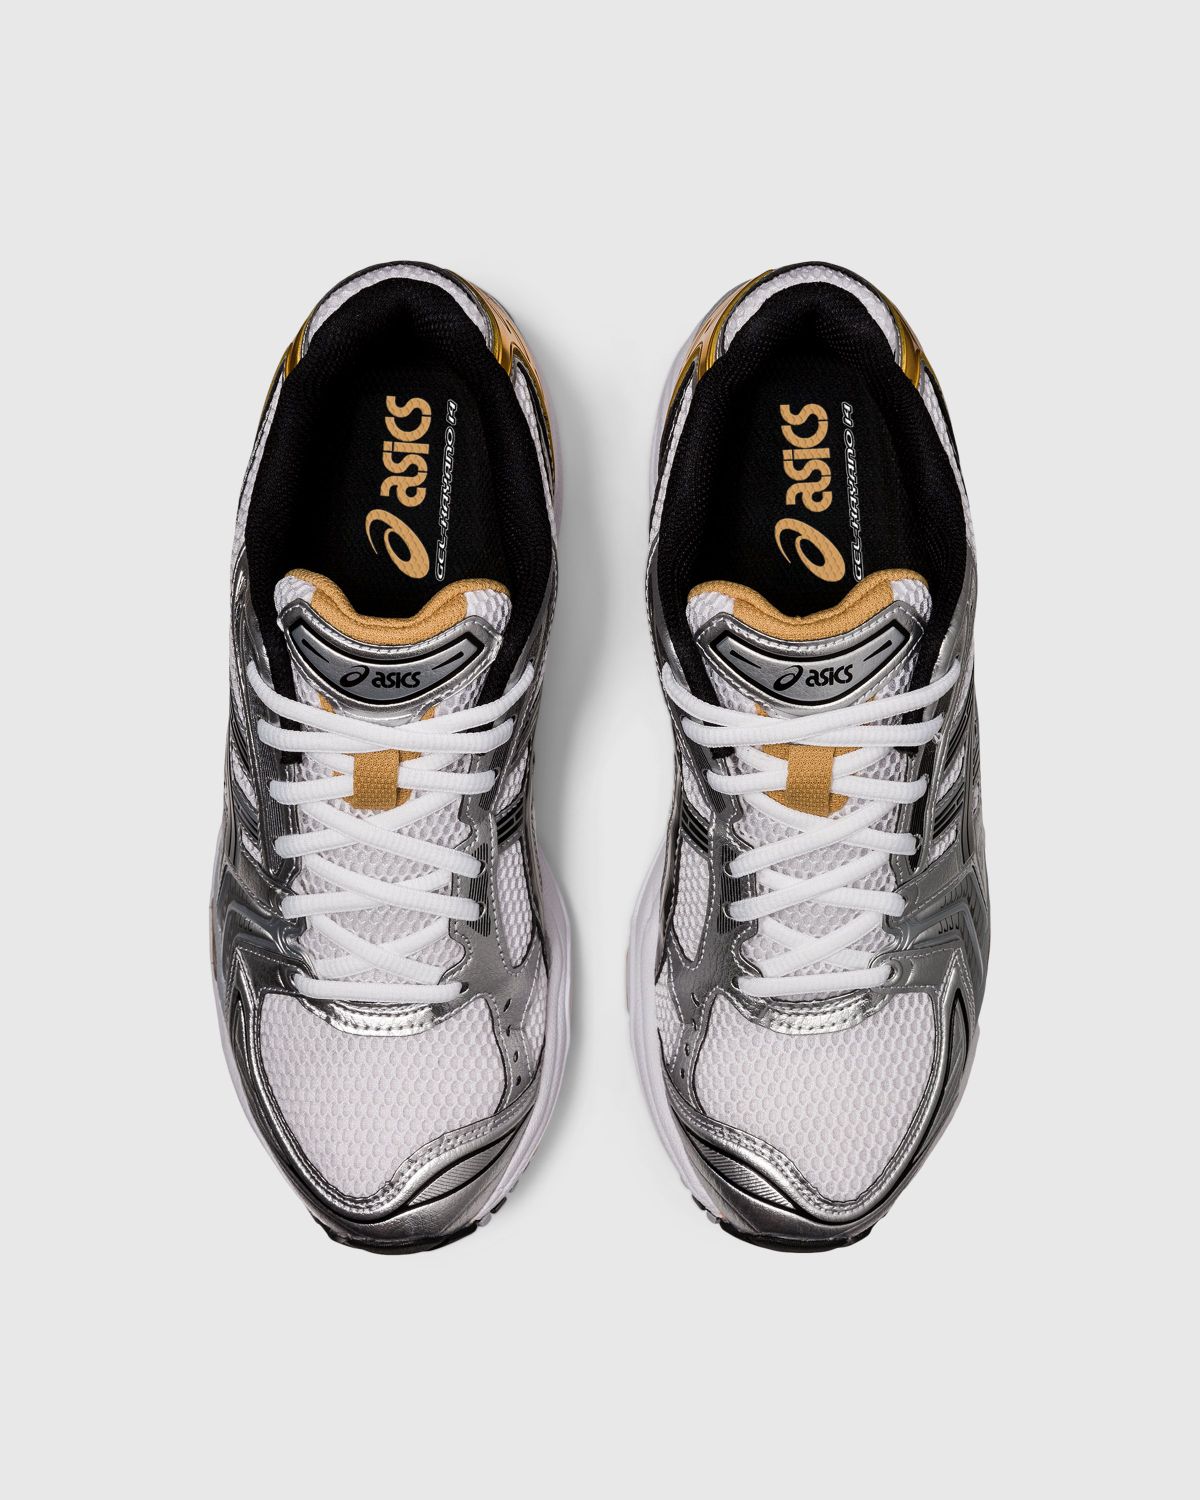 asics – GEL-KAYANO 14 White/Pure Gold - Sneakers - Multi - Image 5